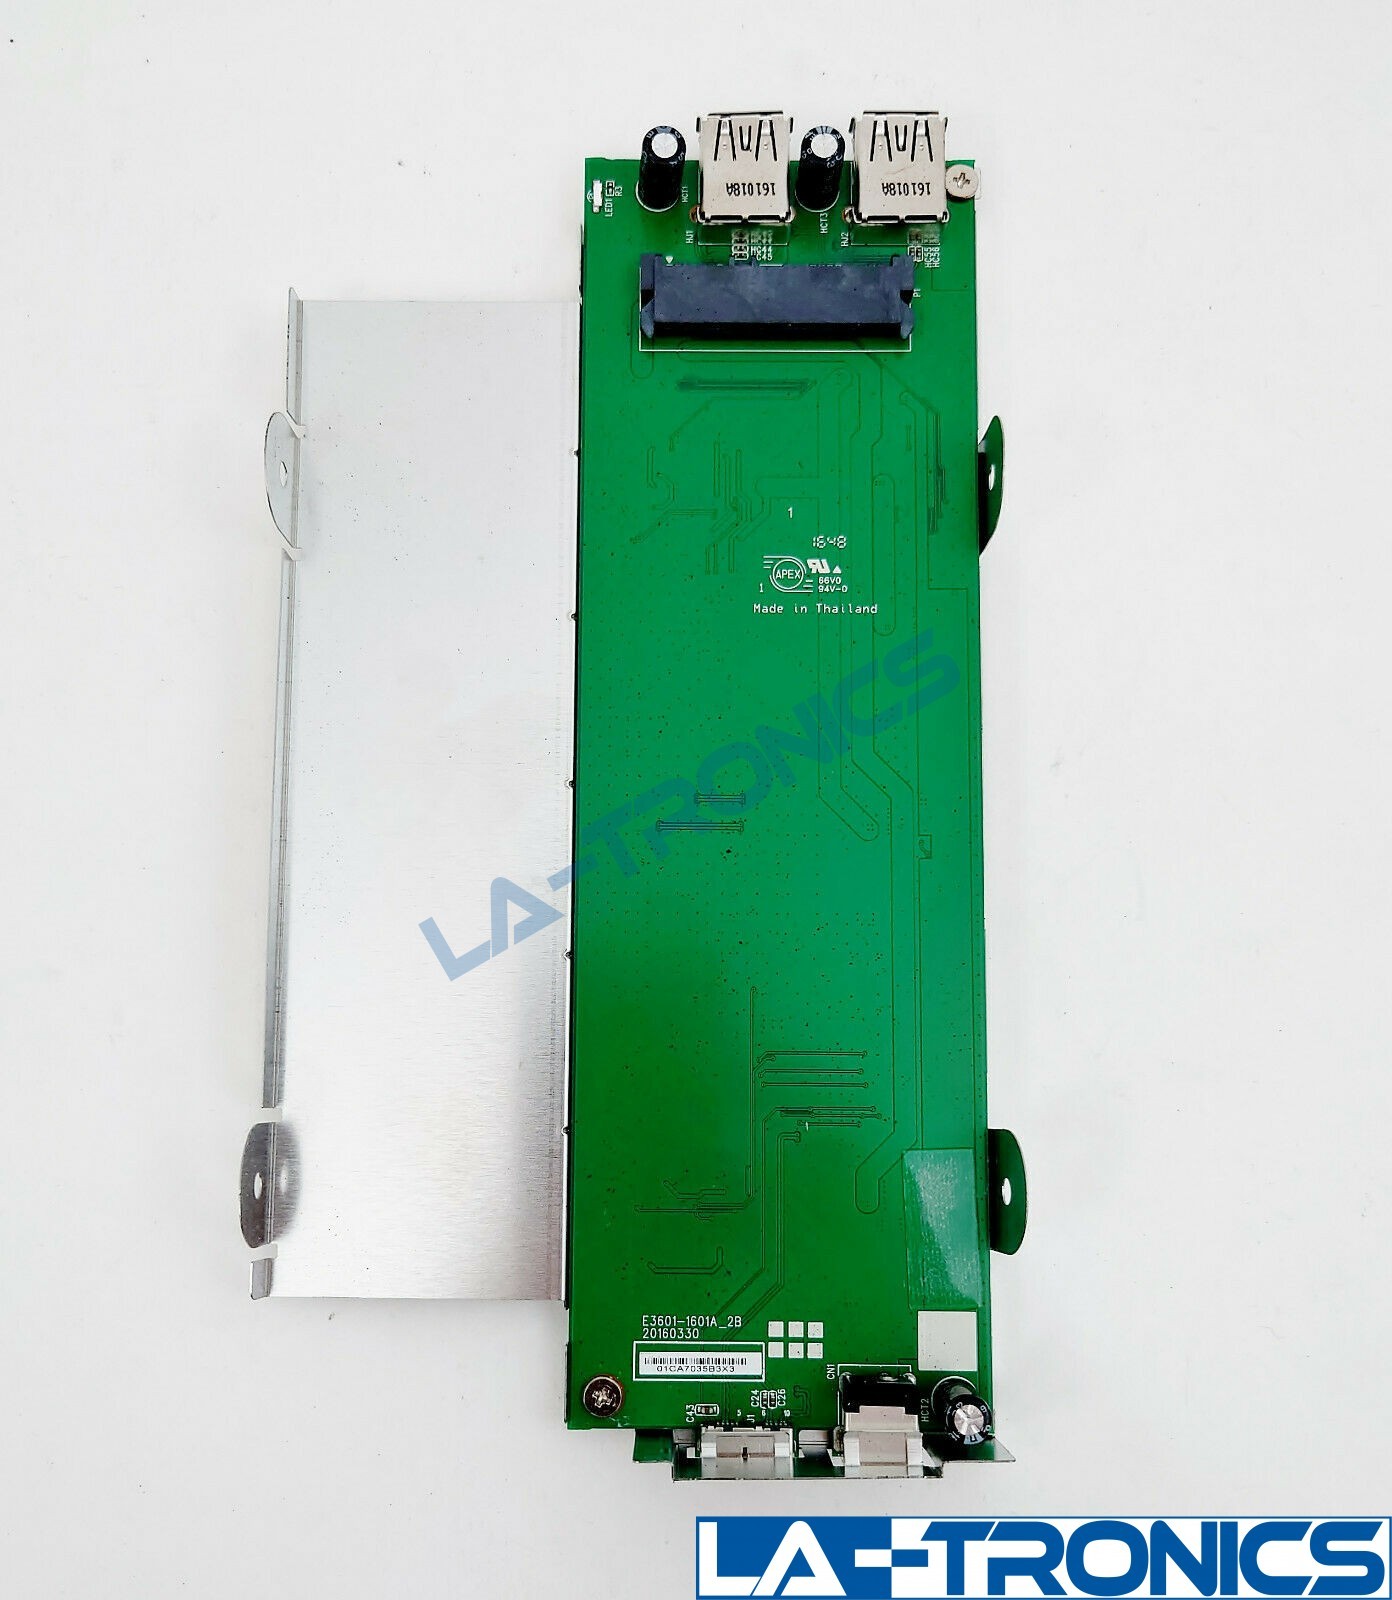 Seagate Backup Plus External Hard Drive PCB Power Board E3601-1601A_2B 20160330